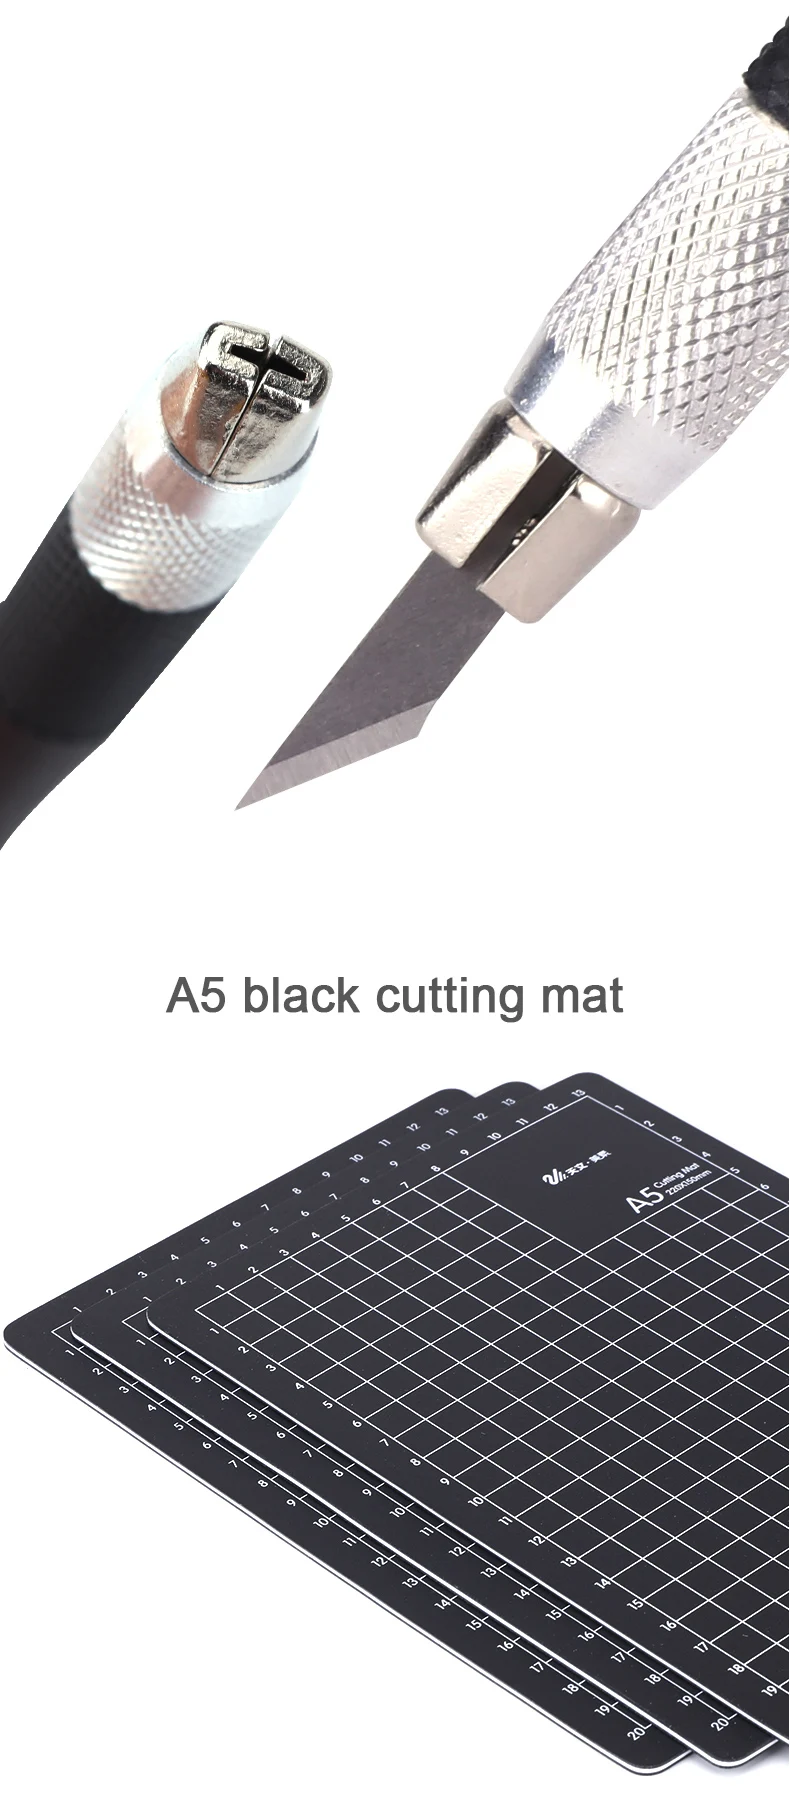 A5 коврик для резки Лоскутная Cut Pad Набор Металл 8 лезвия Craft Ножи комплект Бумага резак резьба Ножи DIY ремесла Инструменты